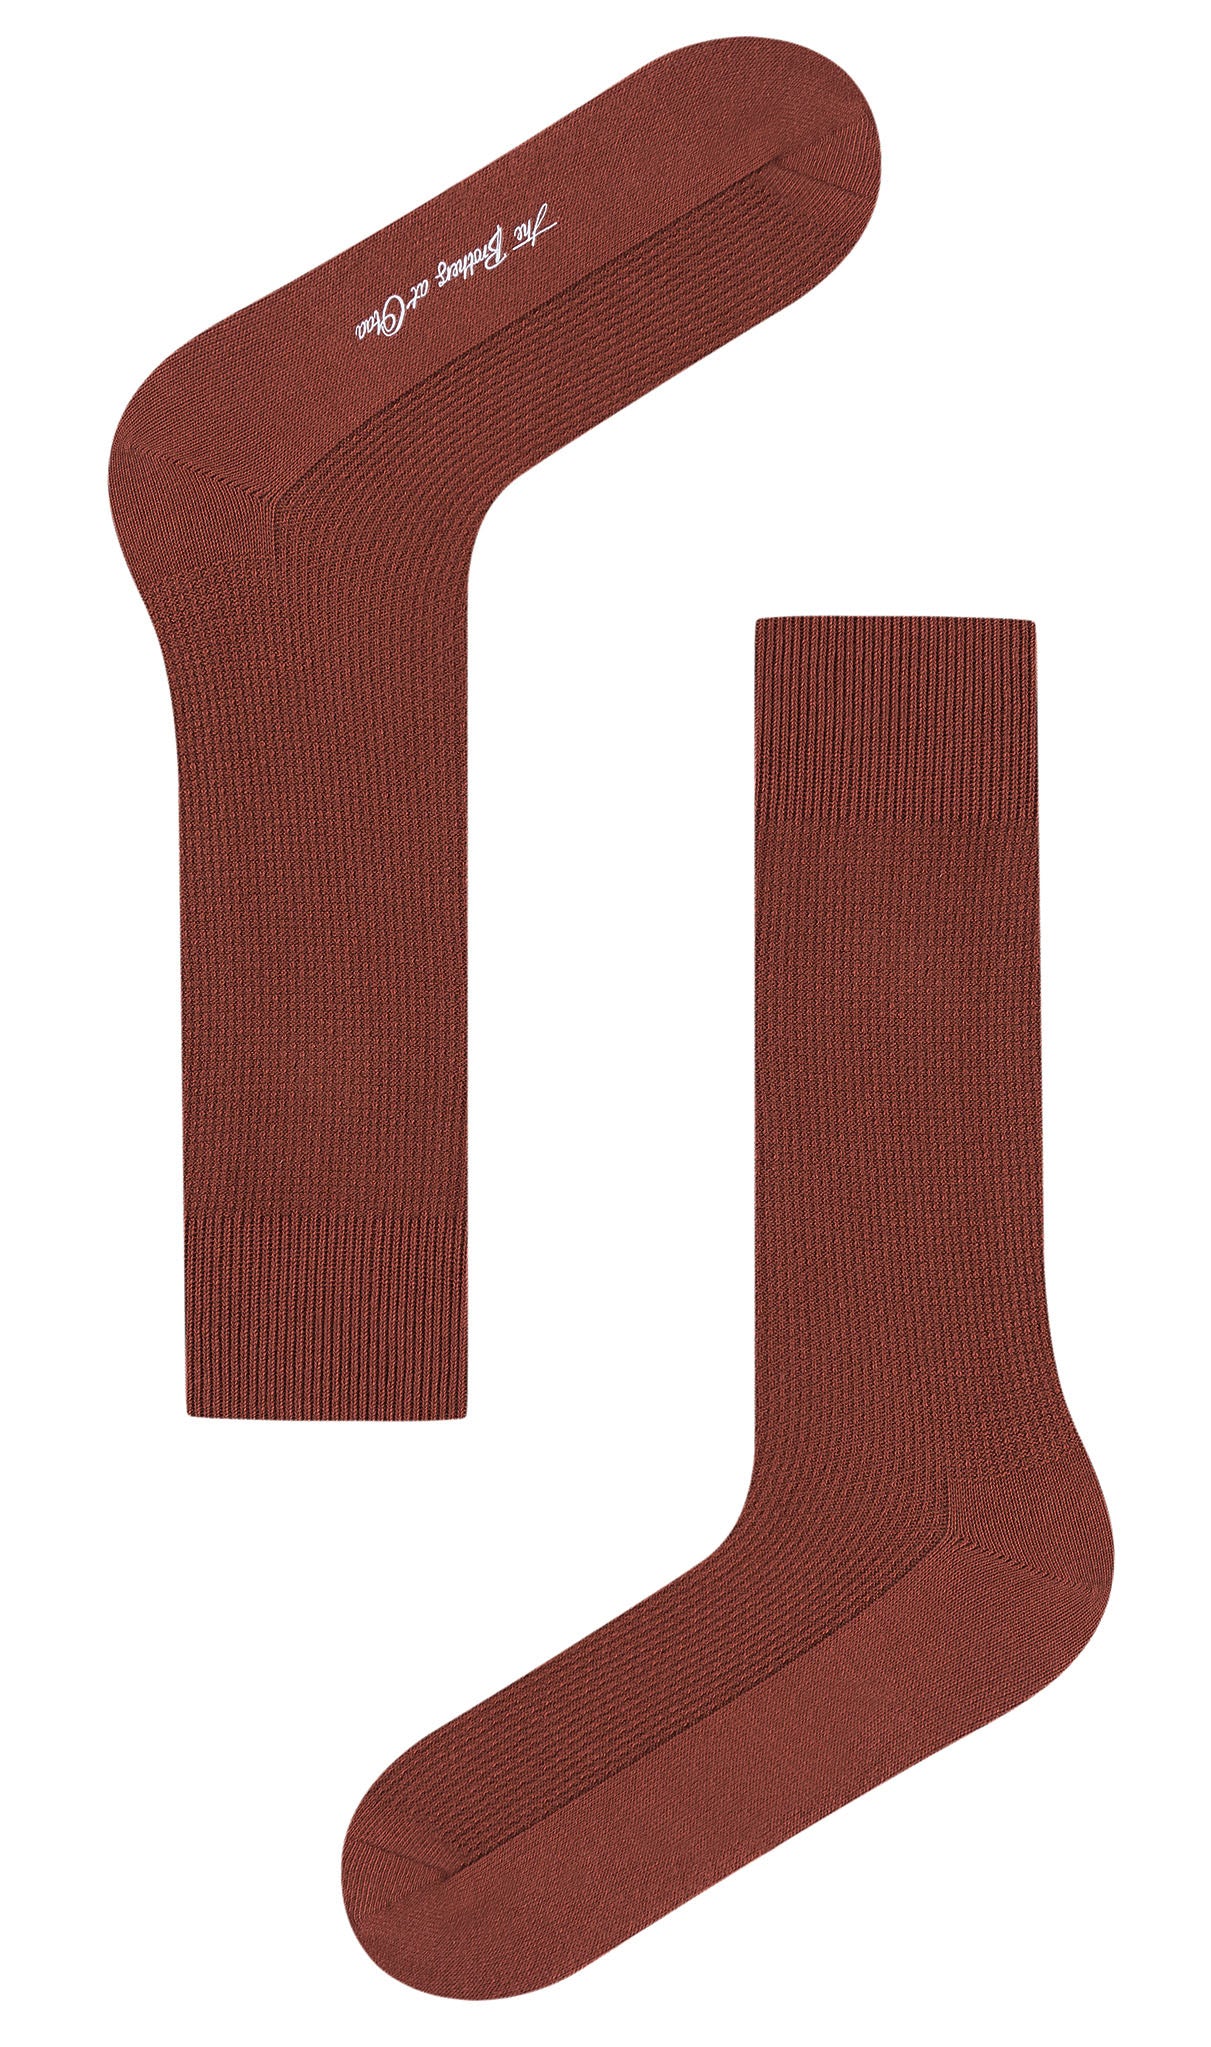 Burnt Golden Brown Textured Socks